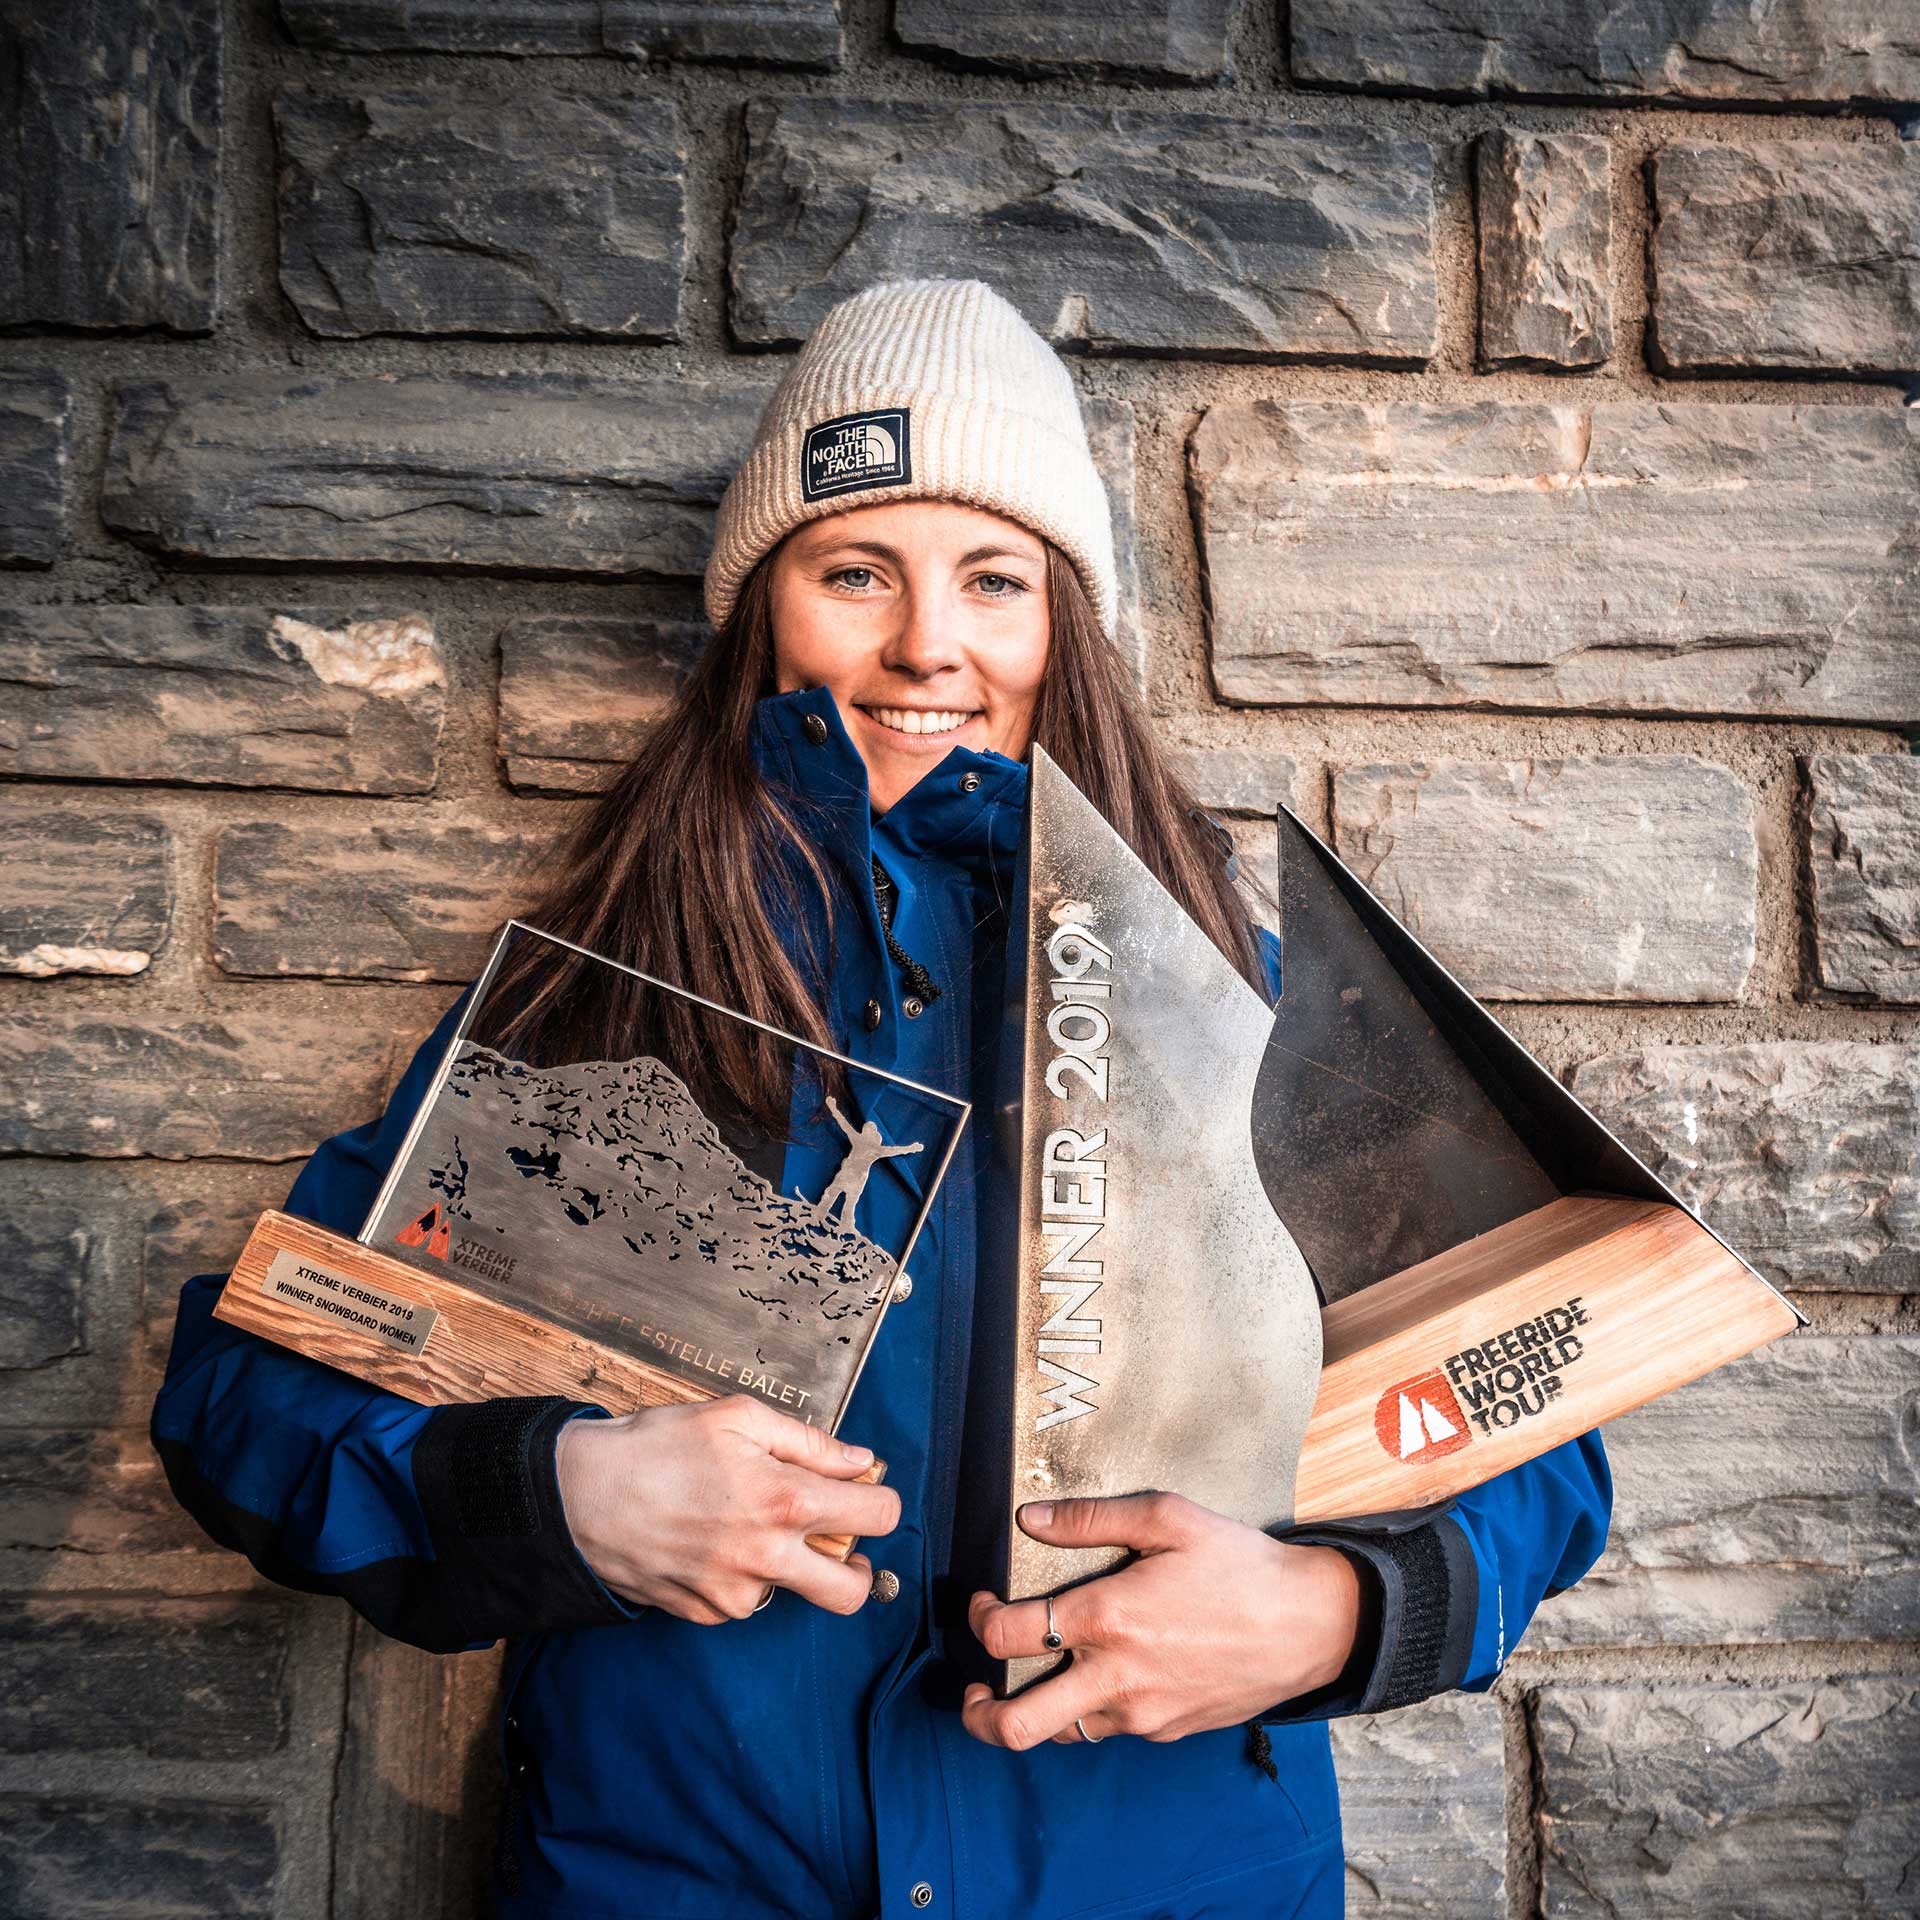 Chamrousse champion marion haerty snowboard freeride championne monde 2017 2019 2020 station montagne ski isère france